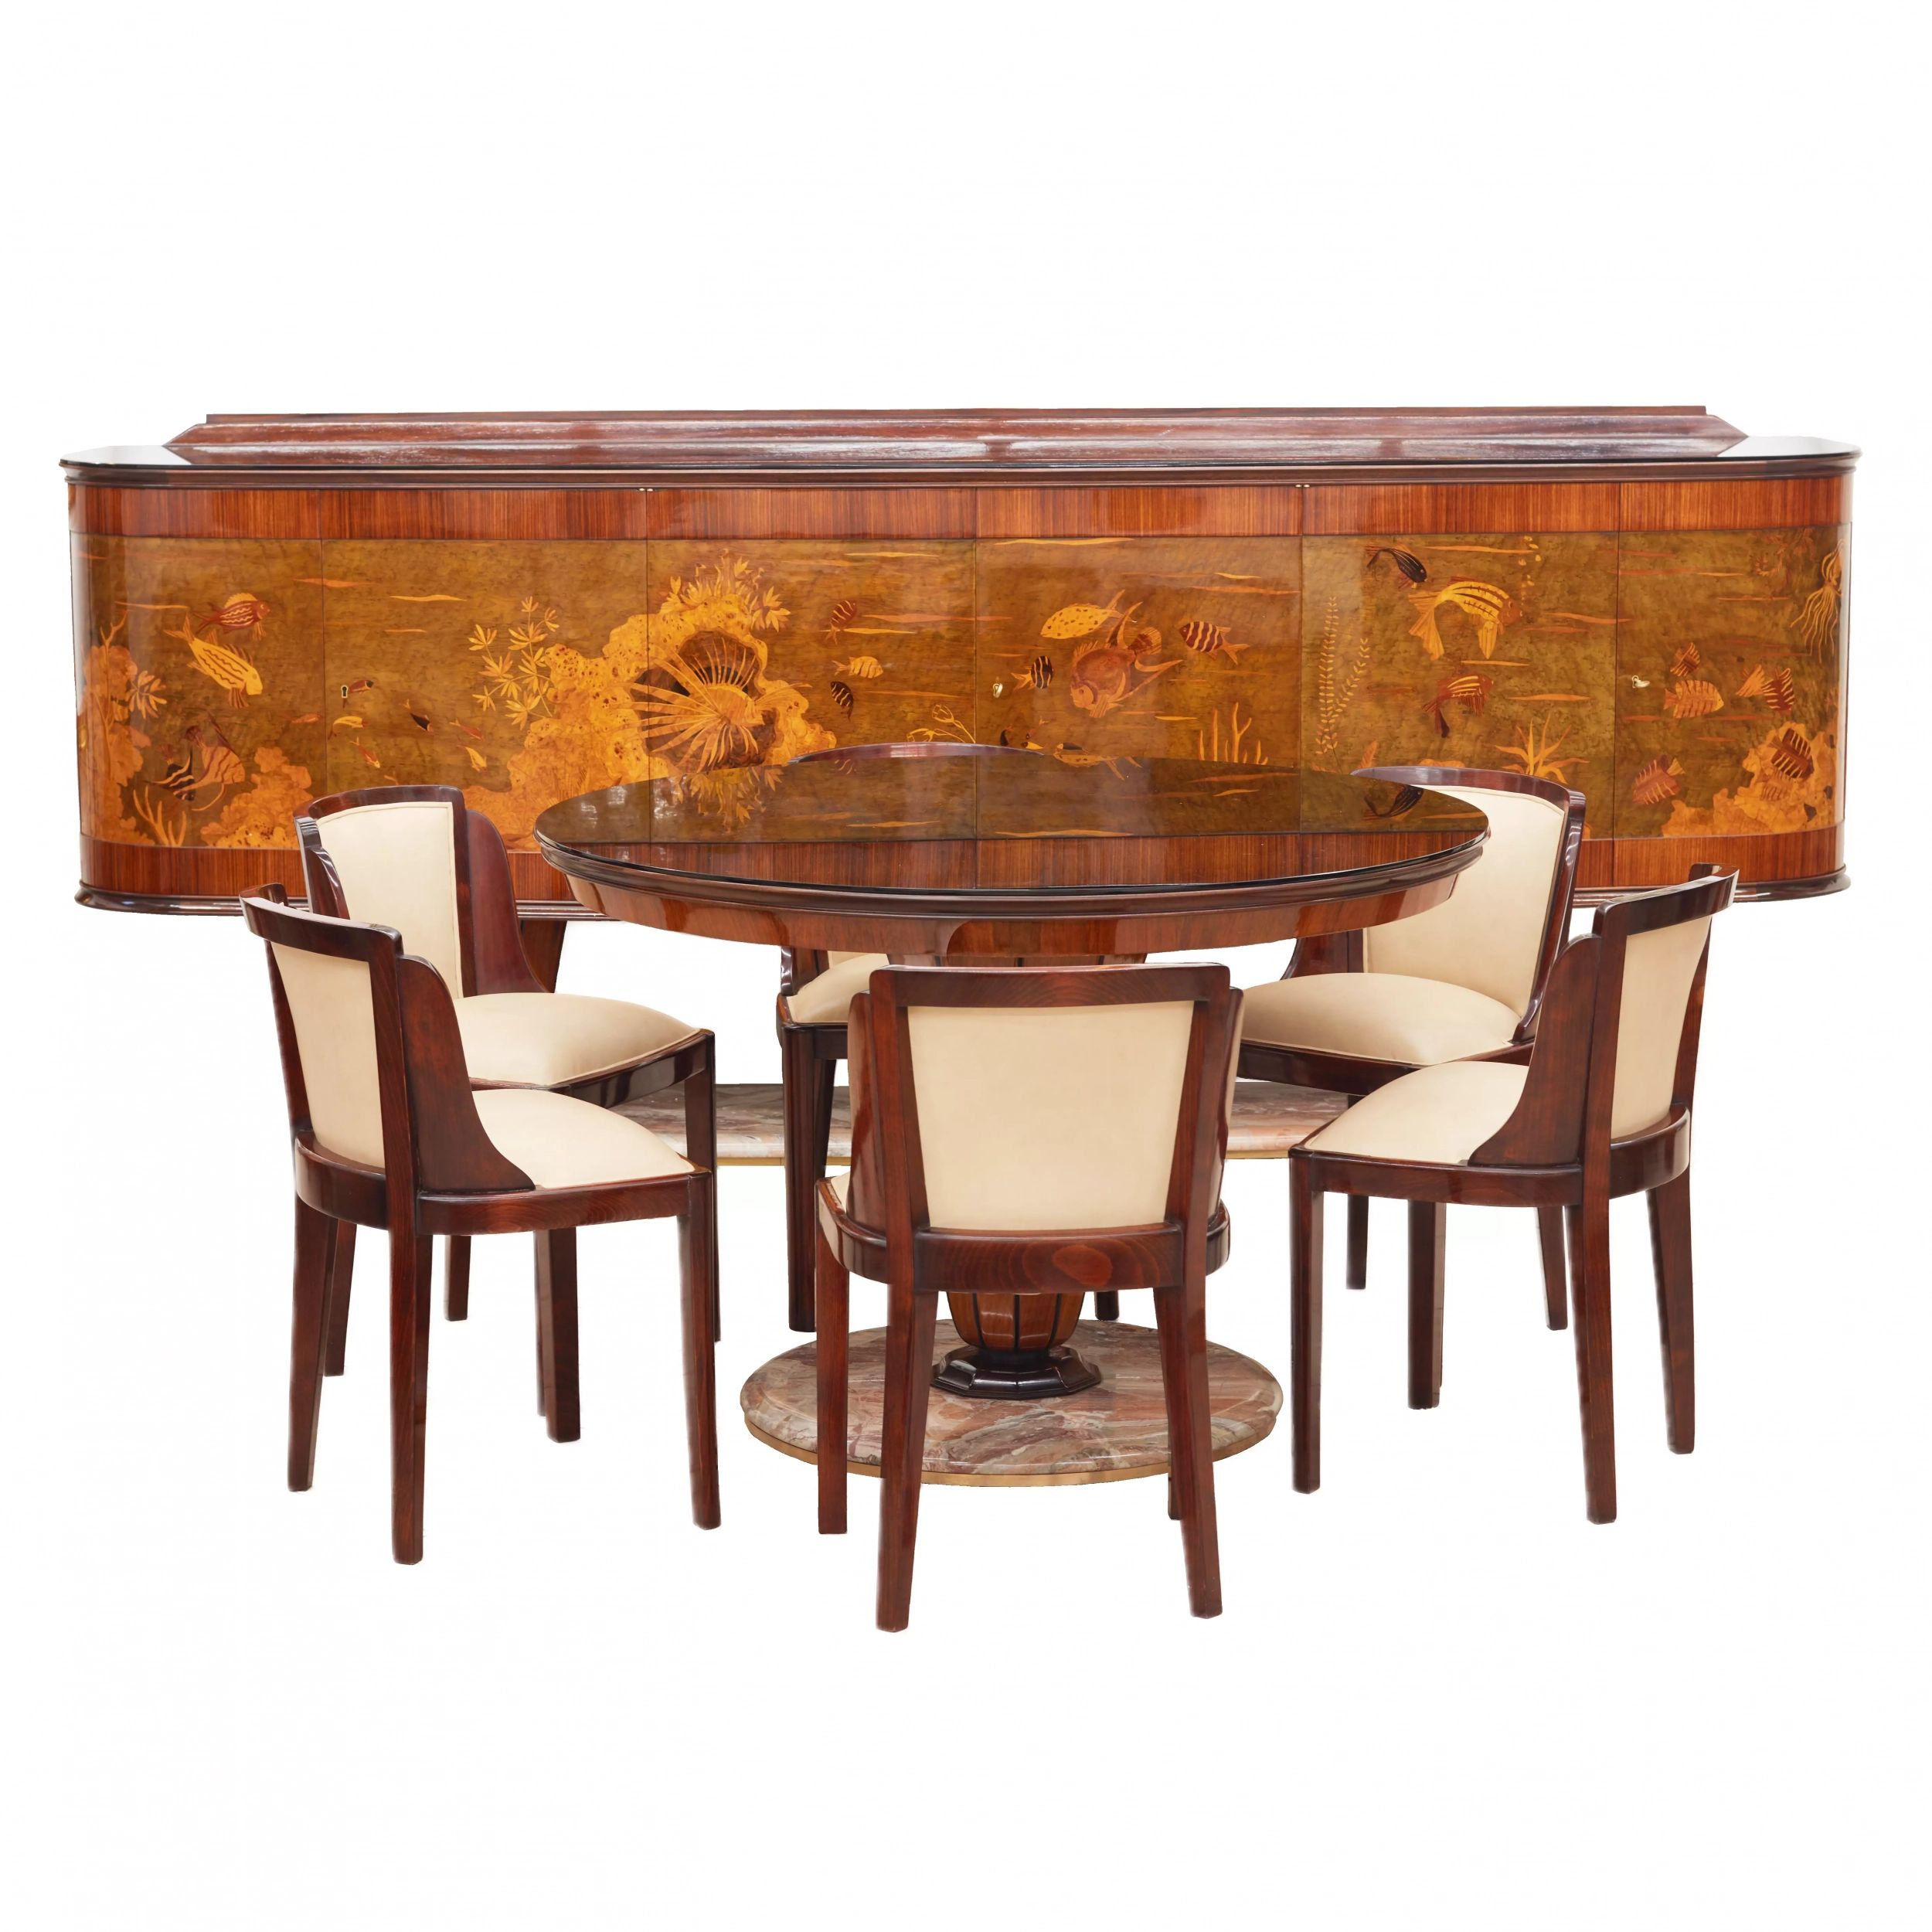 Vittorio Dassi. Grandiose furniture set in Art Deco style. - Image 2 of 11